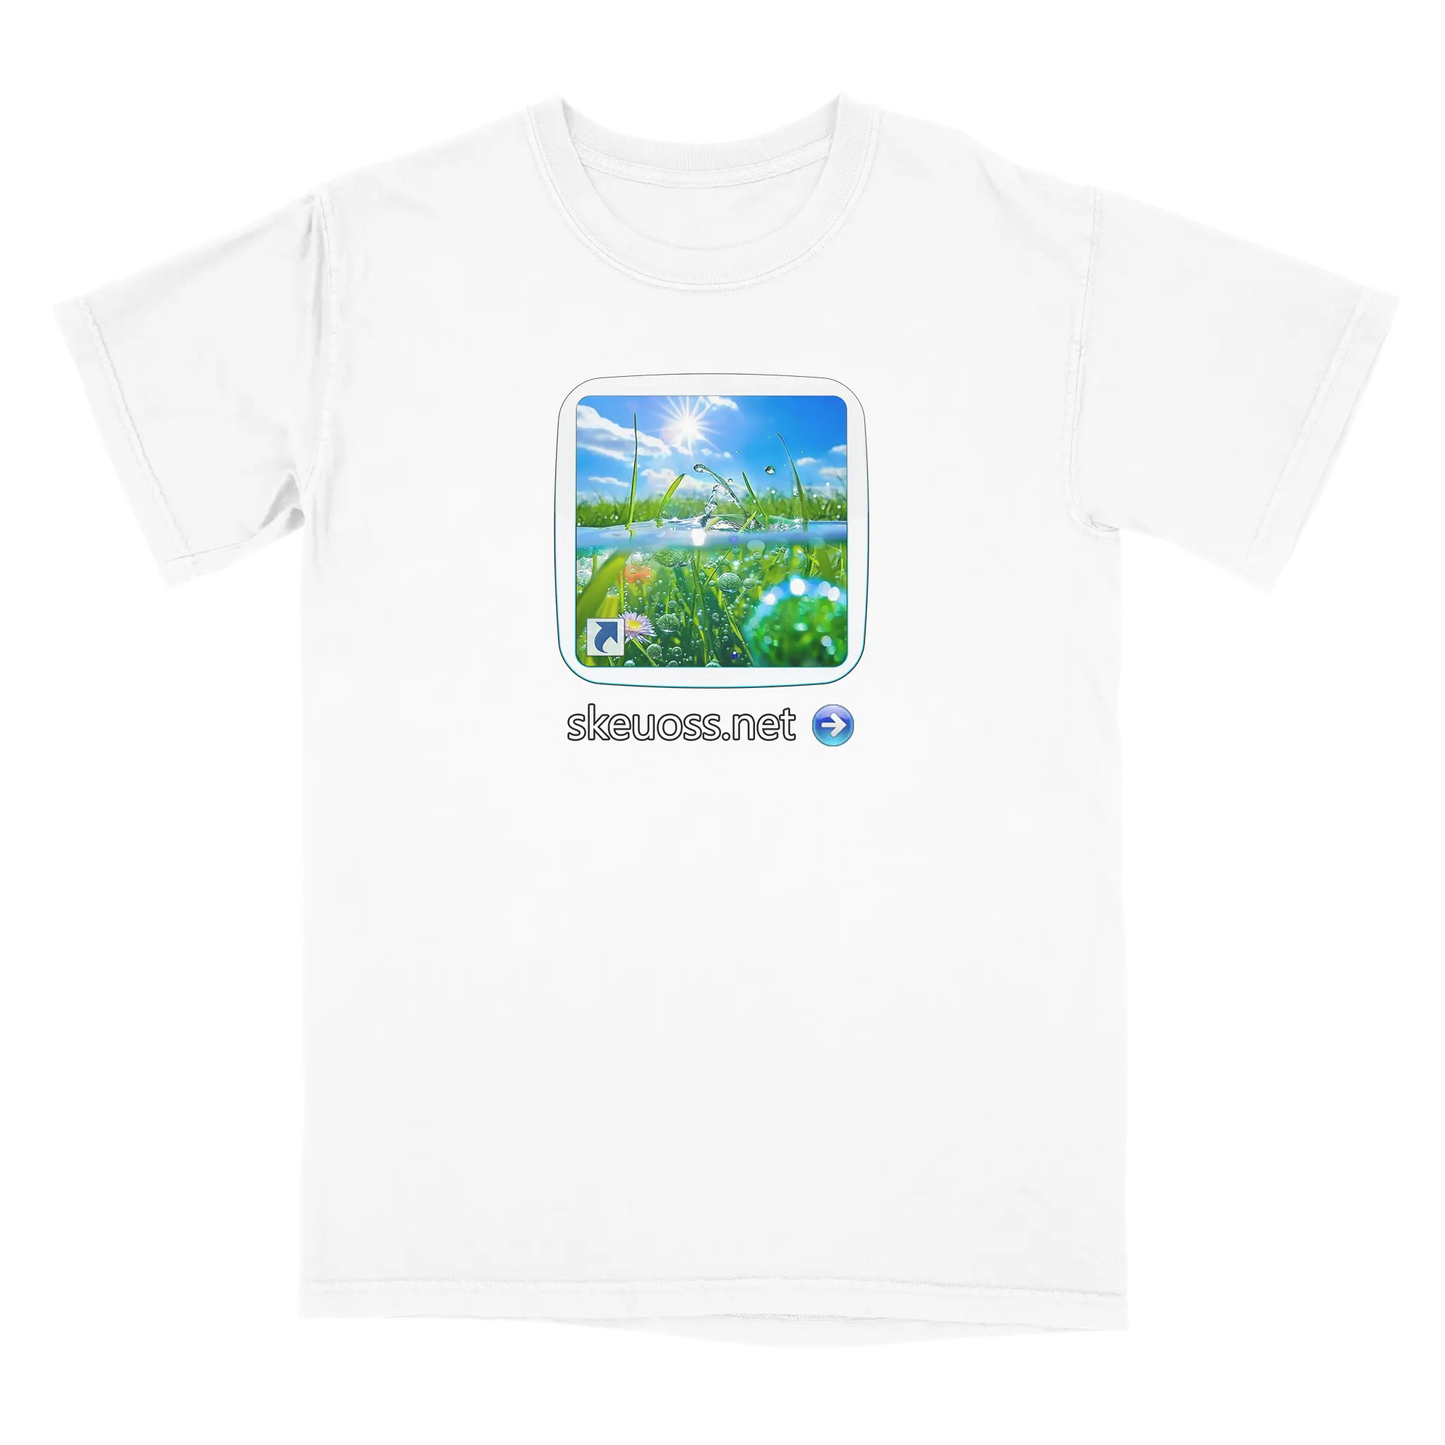 Frutiger Aero T-shirt - User Login Collection - User 254